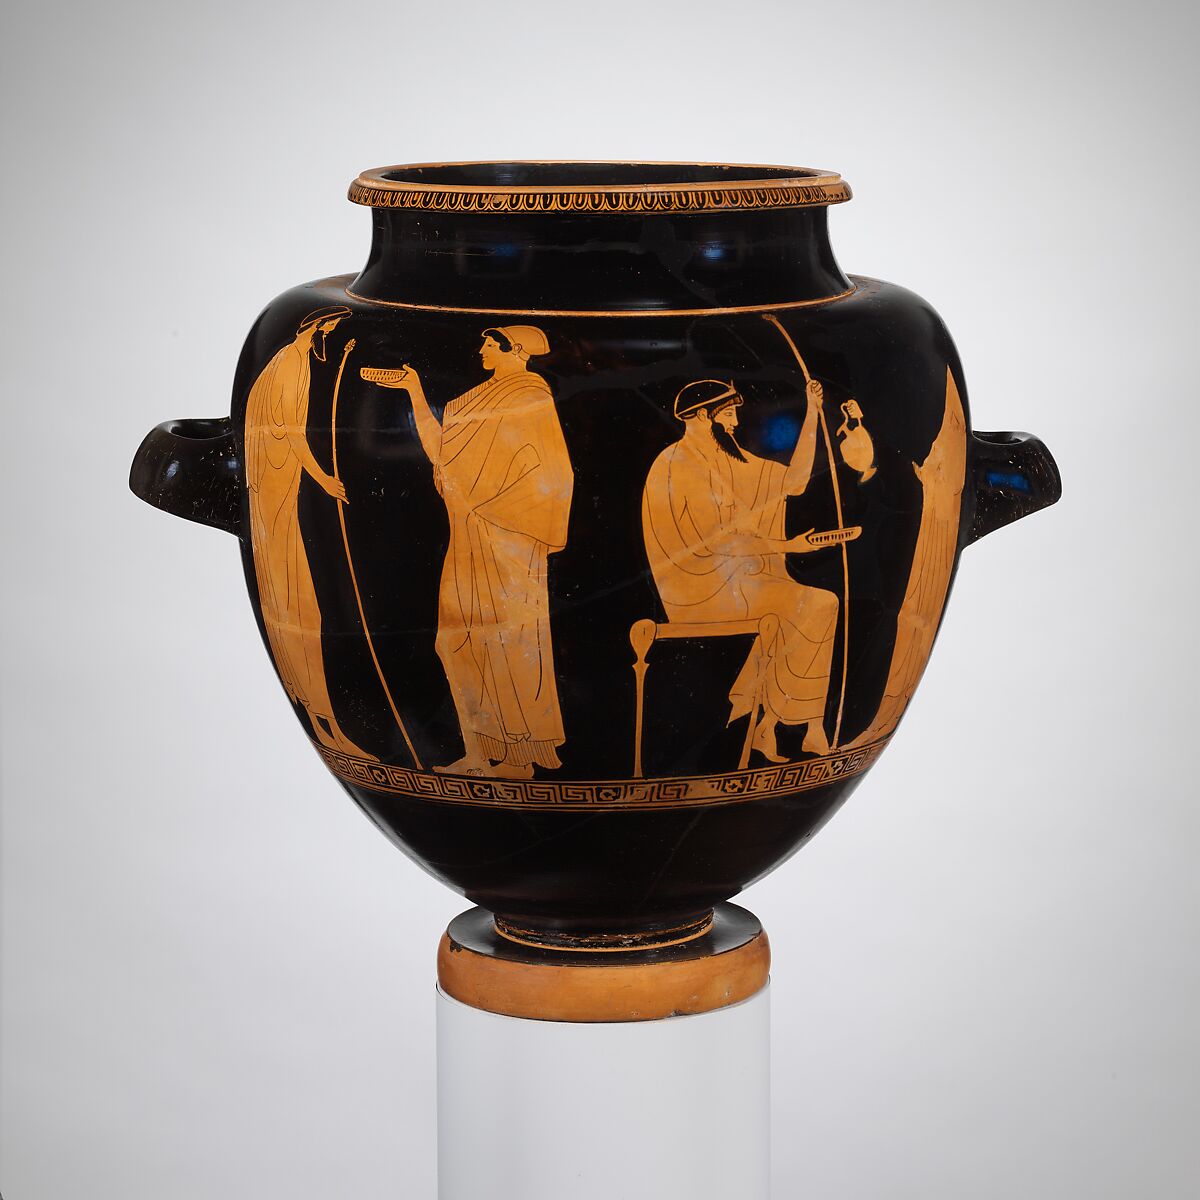 Terracotta stamnos (jar), Copenhagen Painter or the Syriskos Painter, Terracotta, Greek, Attic